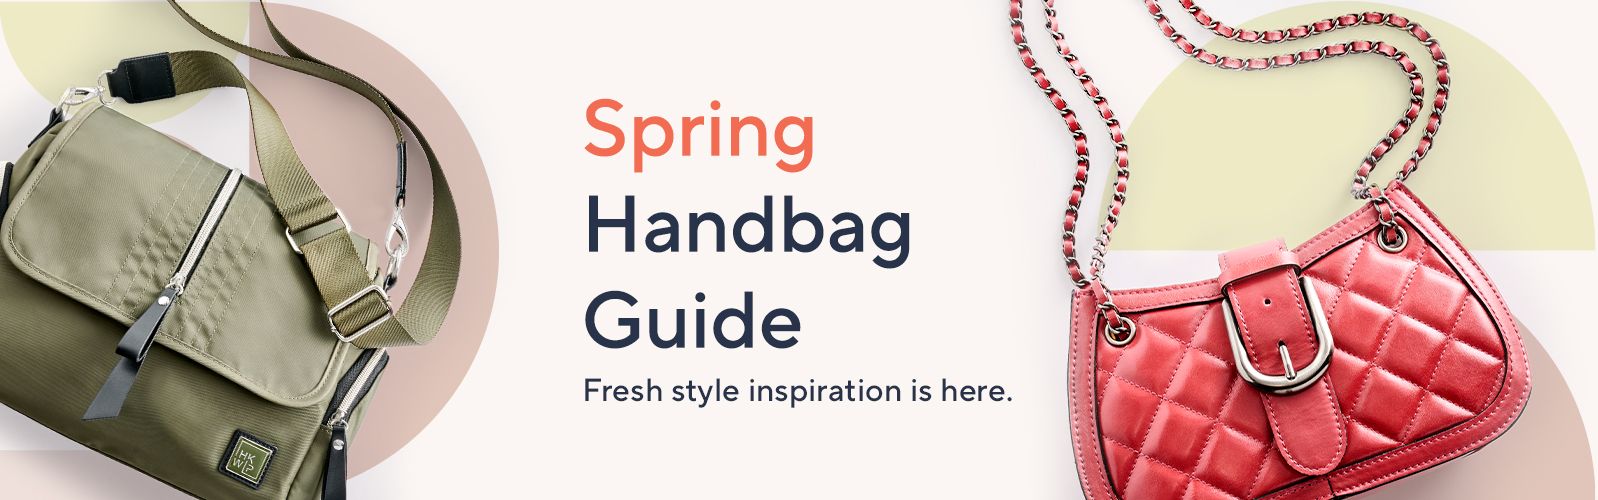 Spring Handbag Guide: Fresh style inspiration is here.